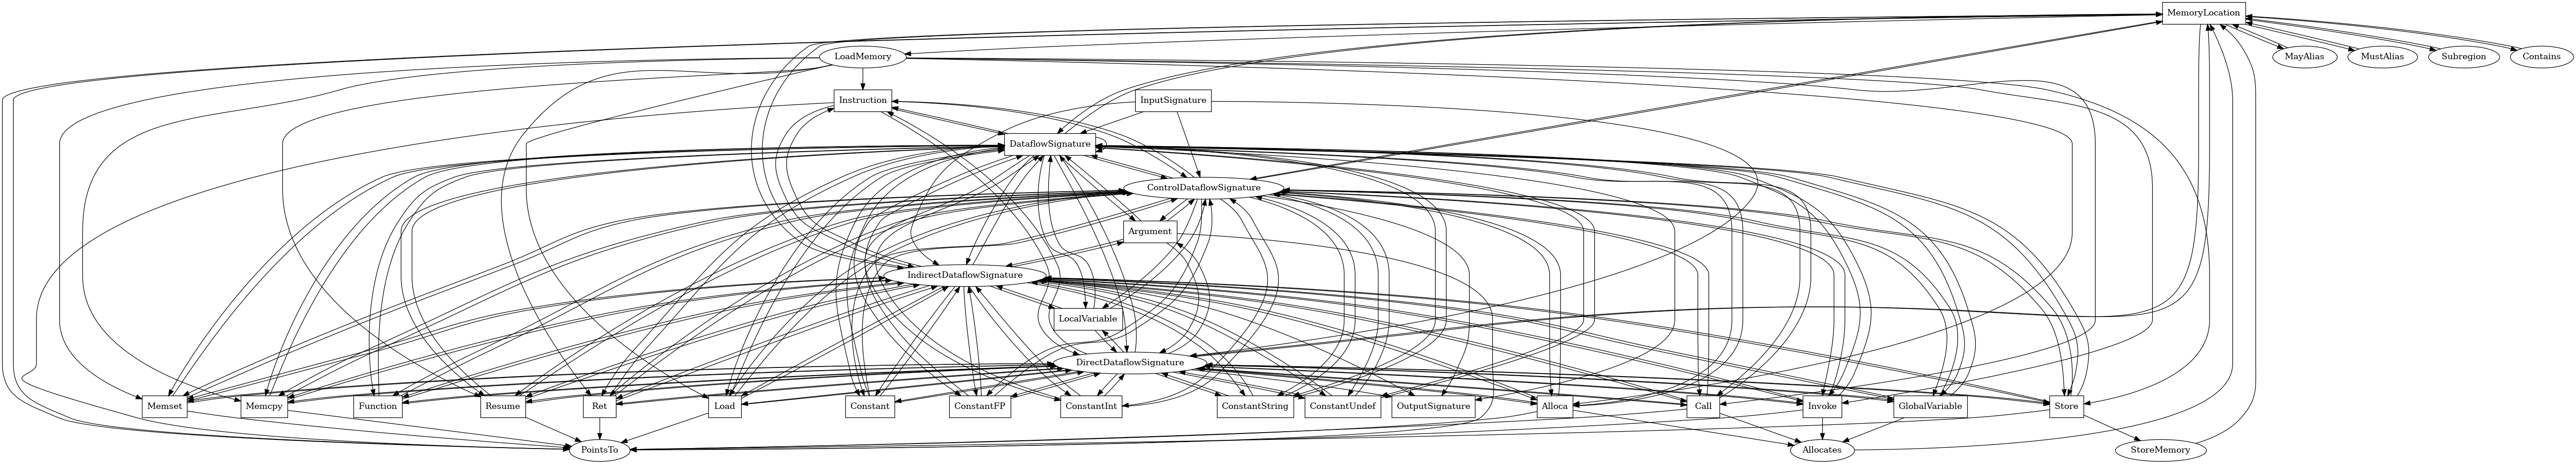 Entity-relationship diagram for MemoryLocation nodes